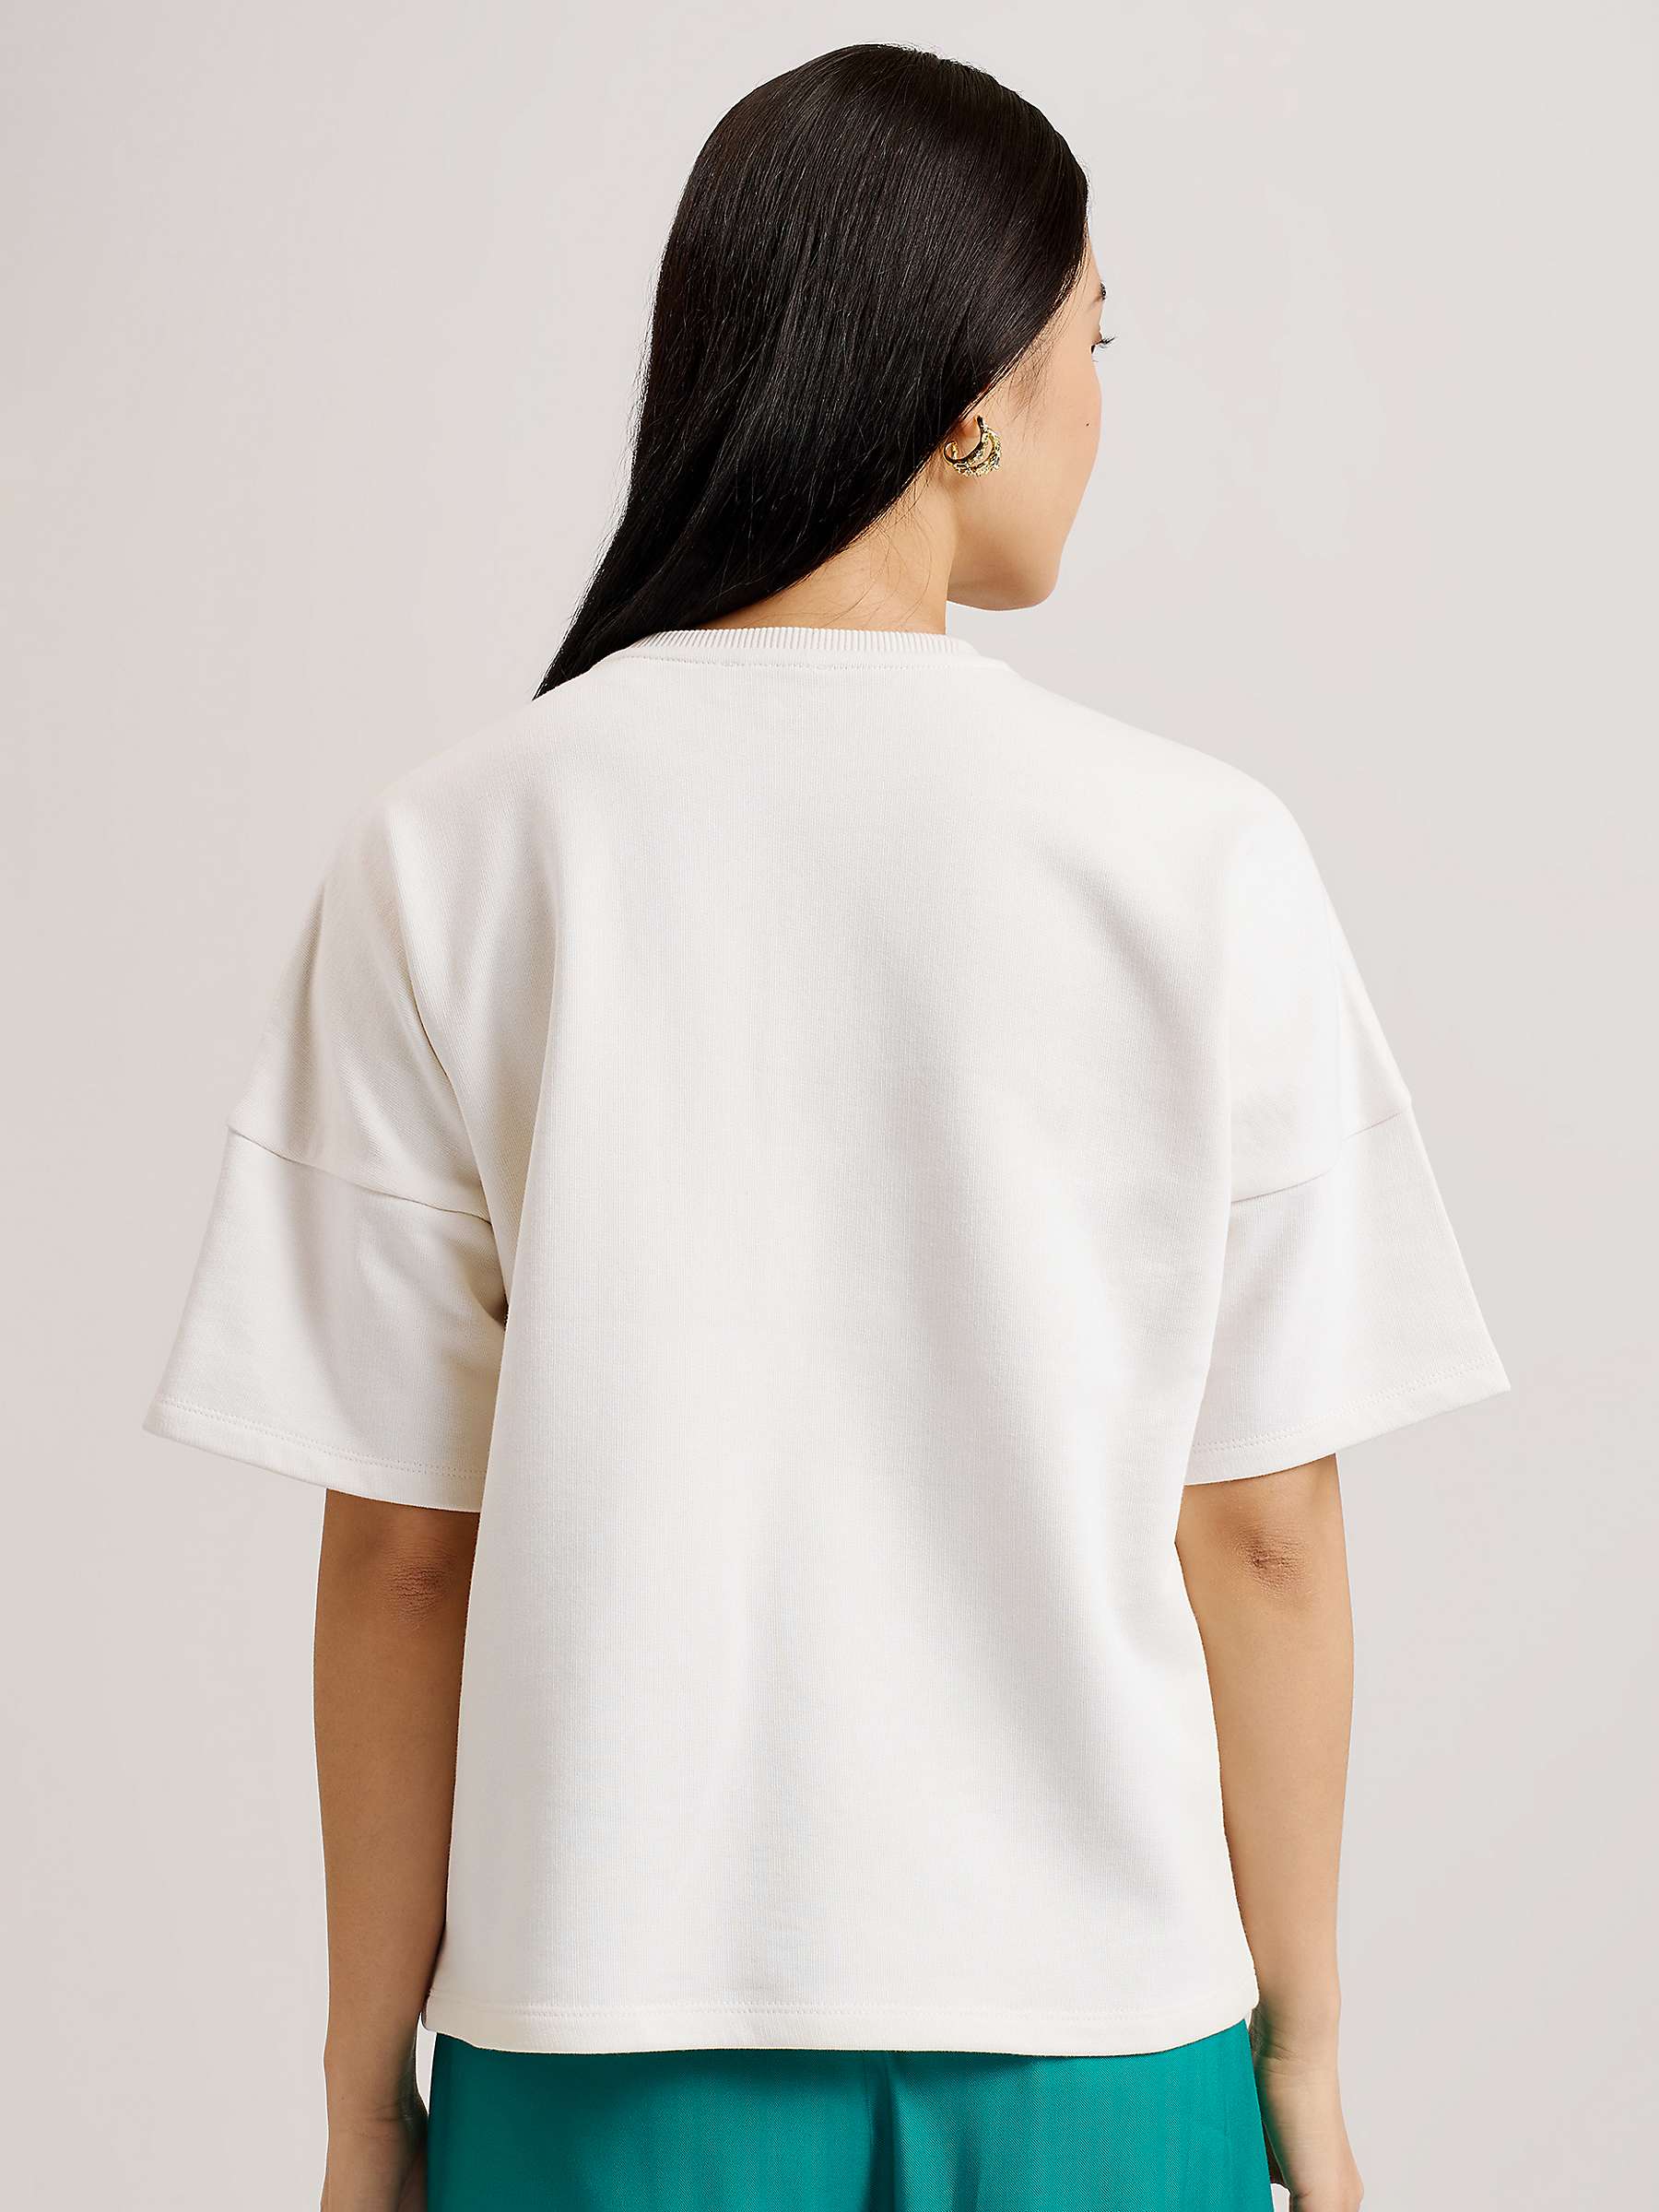 Buy Ted Baker Caraae Sequin Flower Boxy T-Shirt, White/Multi Online at johnlewis.com